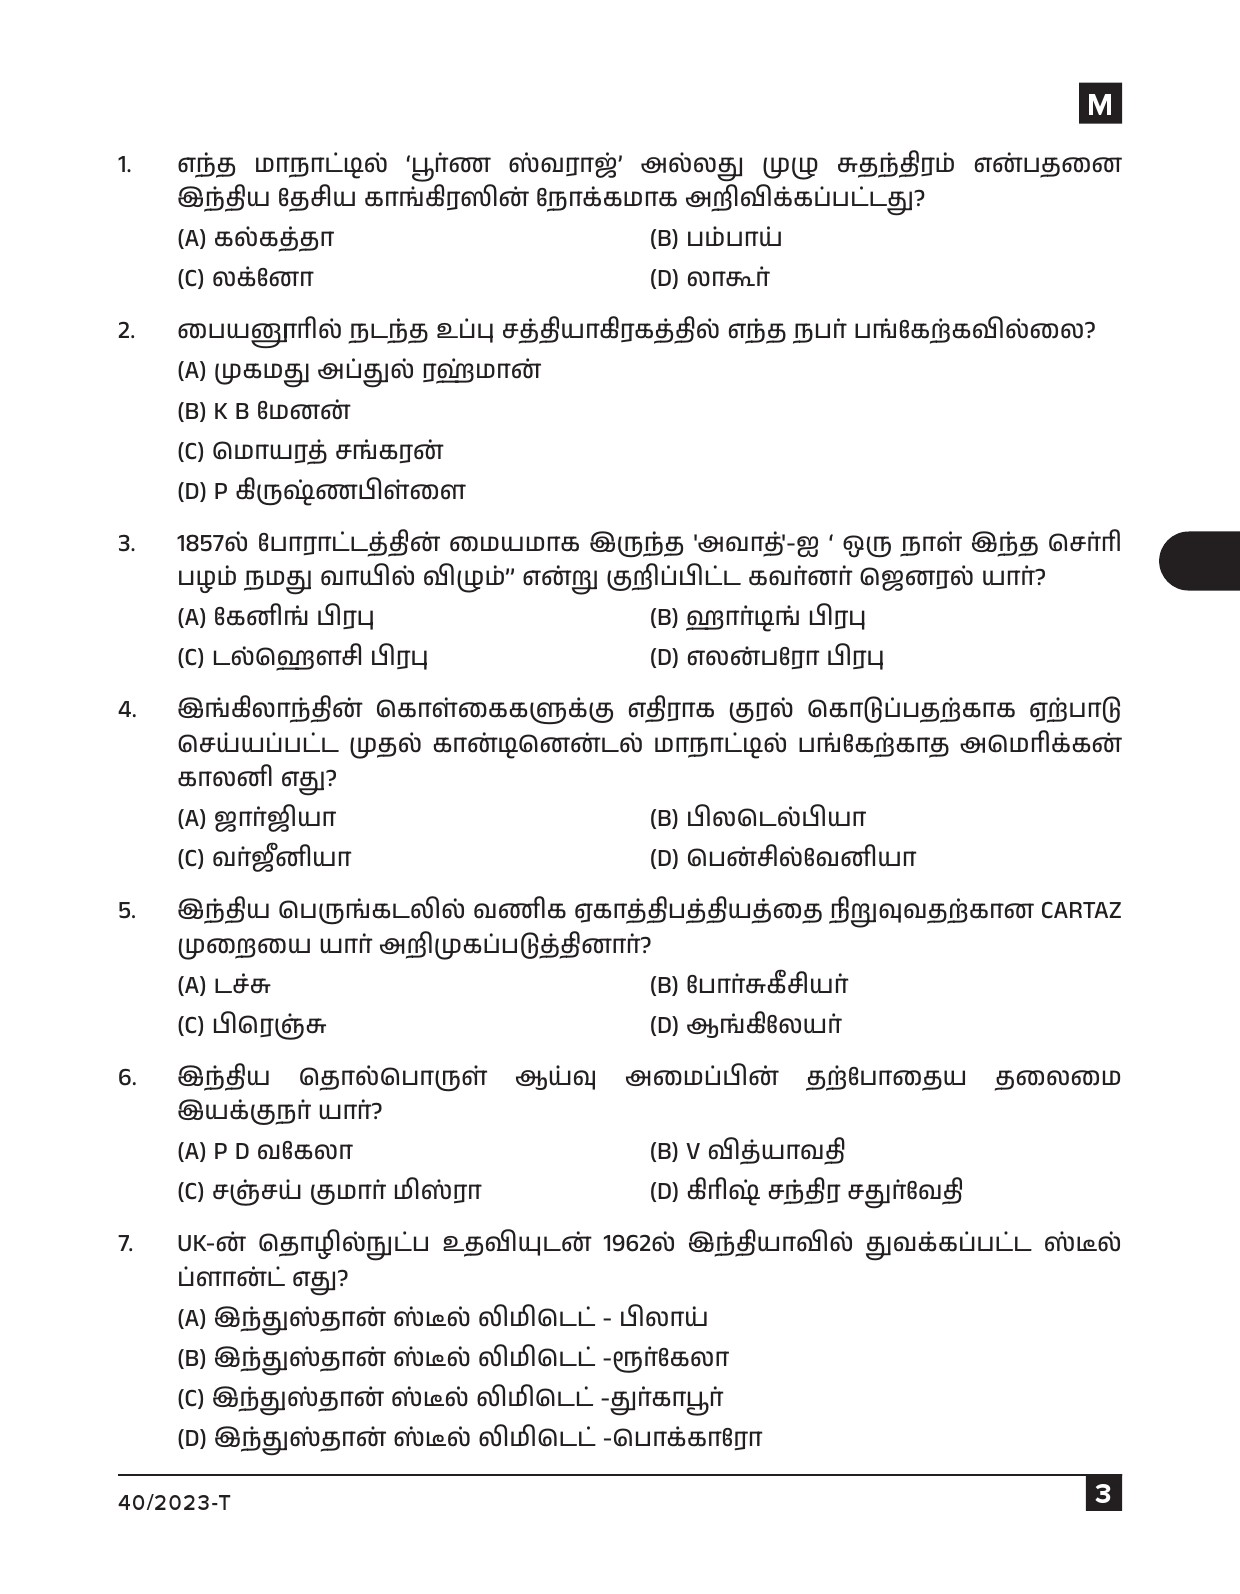 KPSC Data Entry Operator Tamil Exam 2023 Code 0402023 T 2